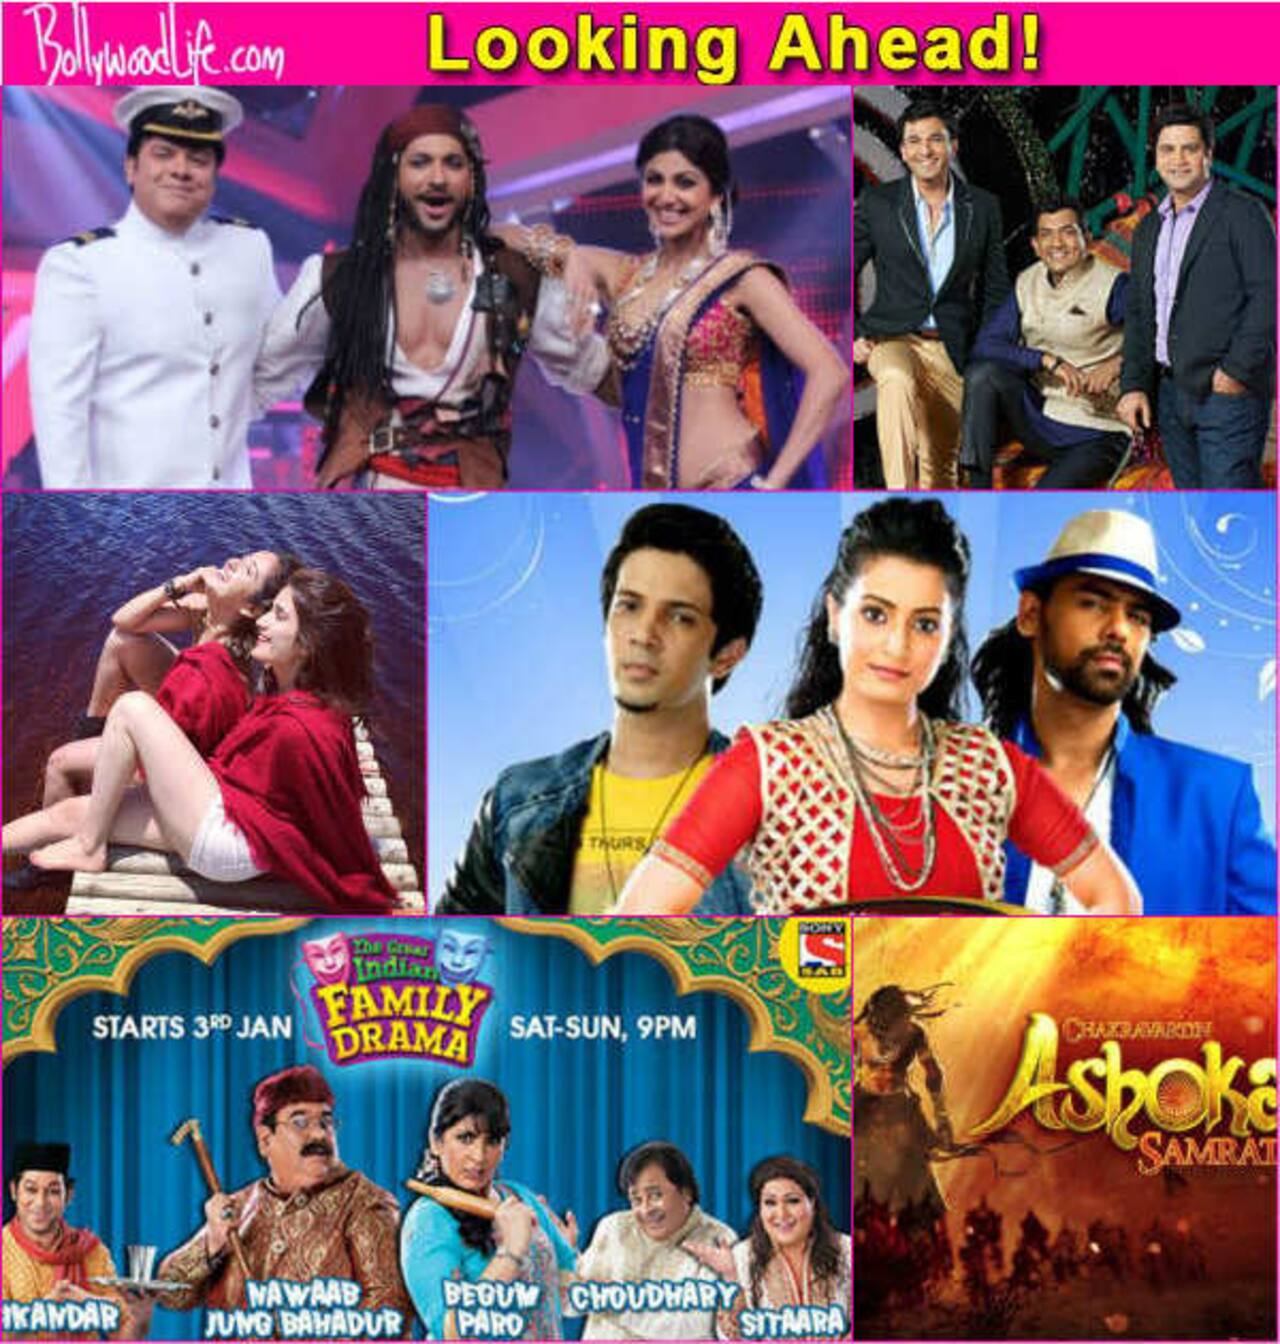 New Year Special: Khatron Ke Khiladi 6, Masterchef India 4, Ashoka Samrat – TV shows to watch out for in 2015